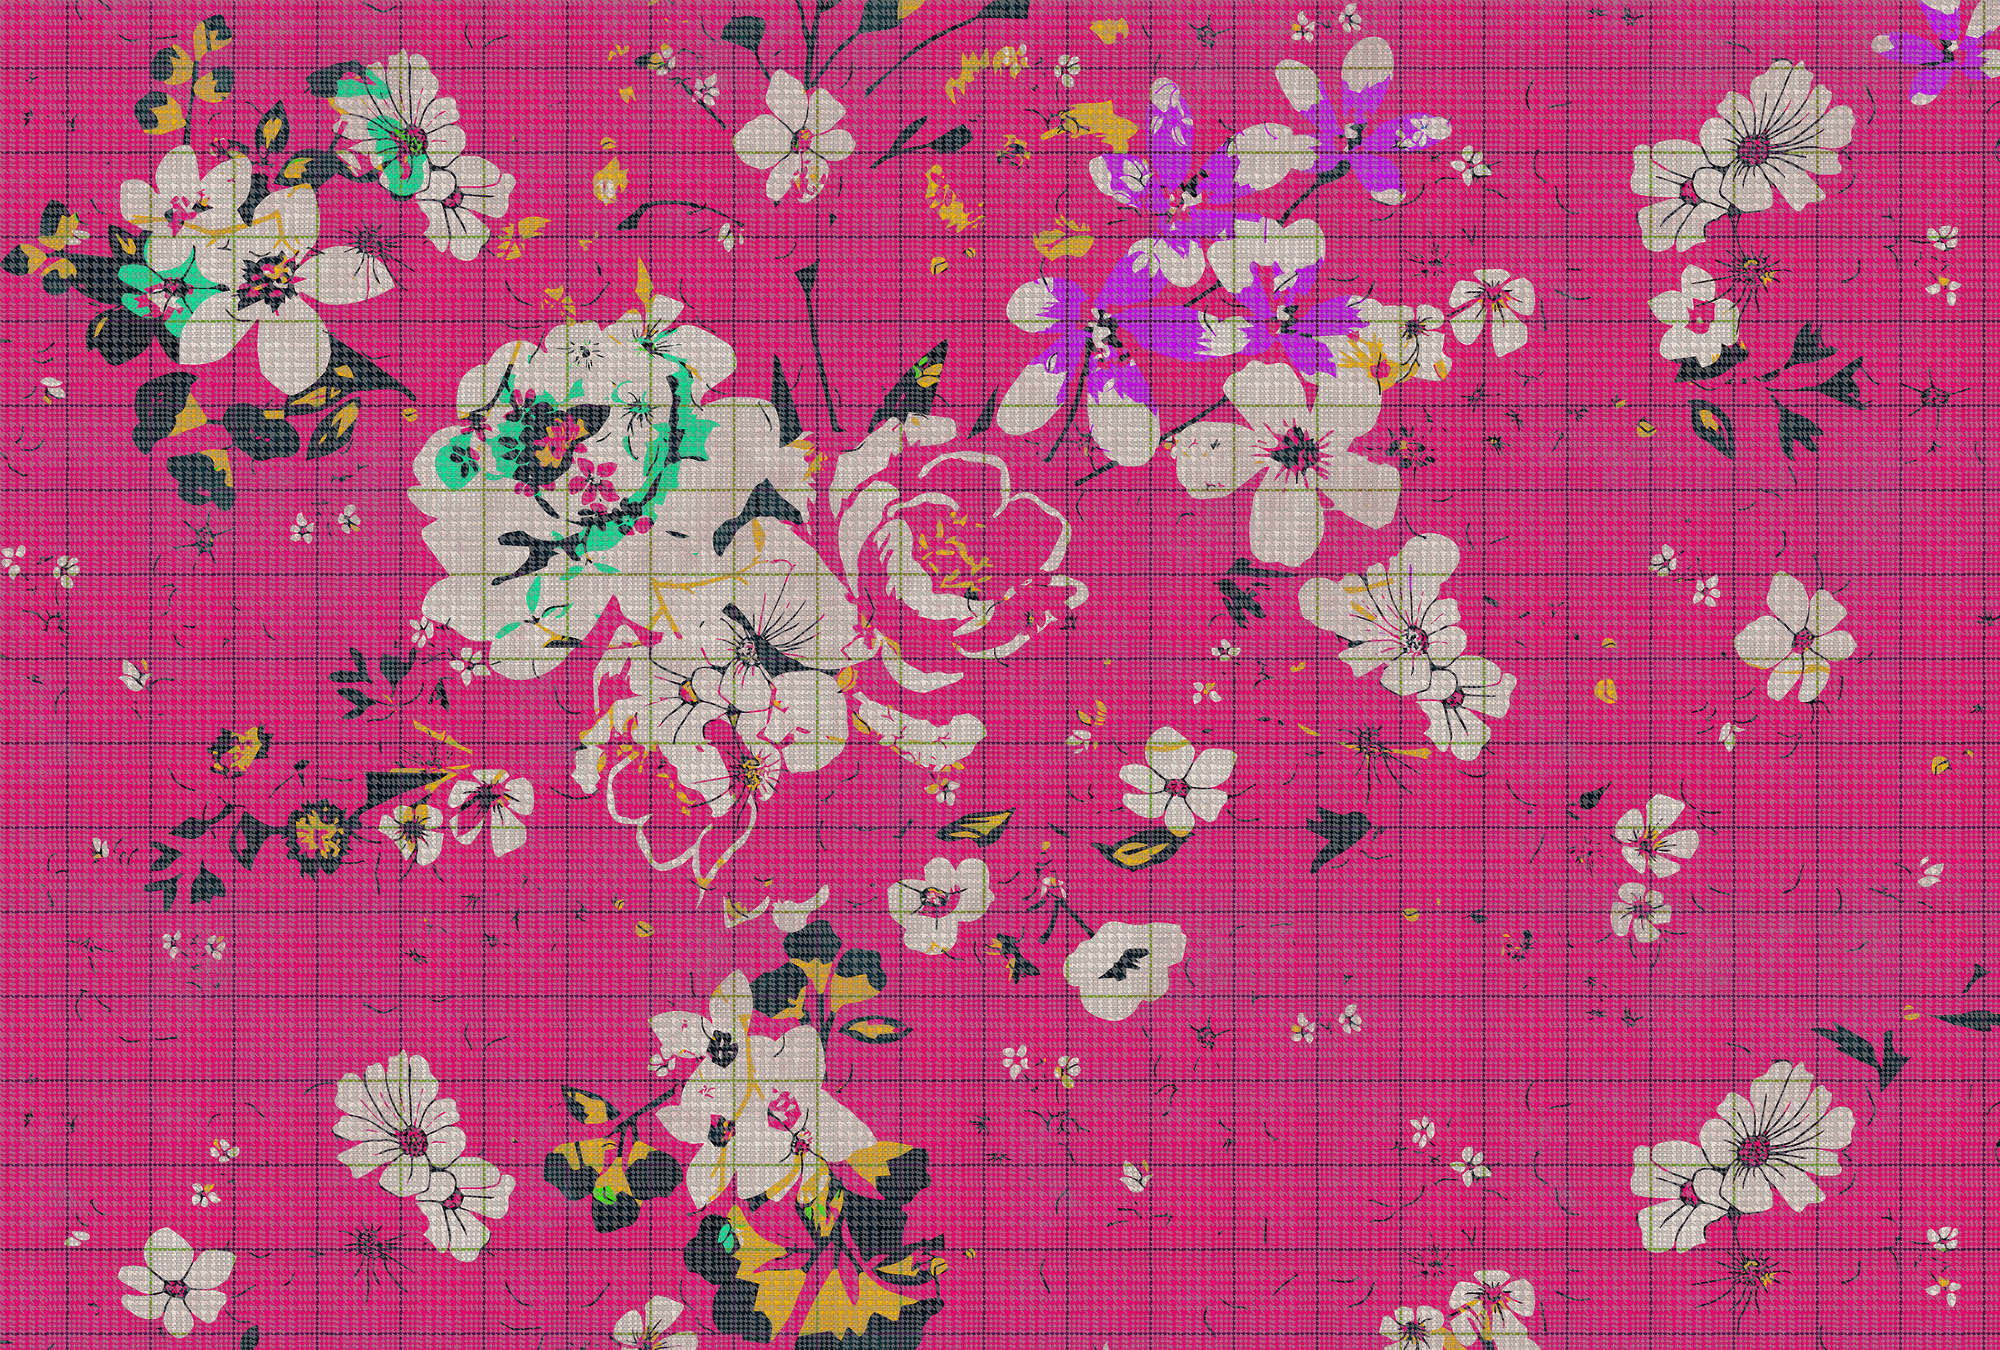             Flower plaid 2 - Fototapete in karierter Optik buntes Blumenmosaik Pink – Grün, Rosa | Struktur Vlies
        